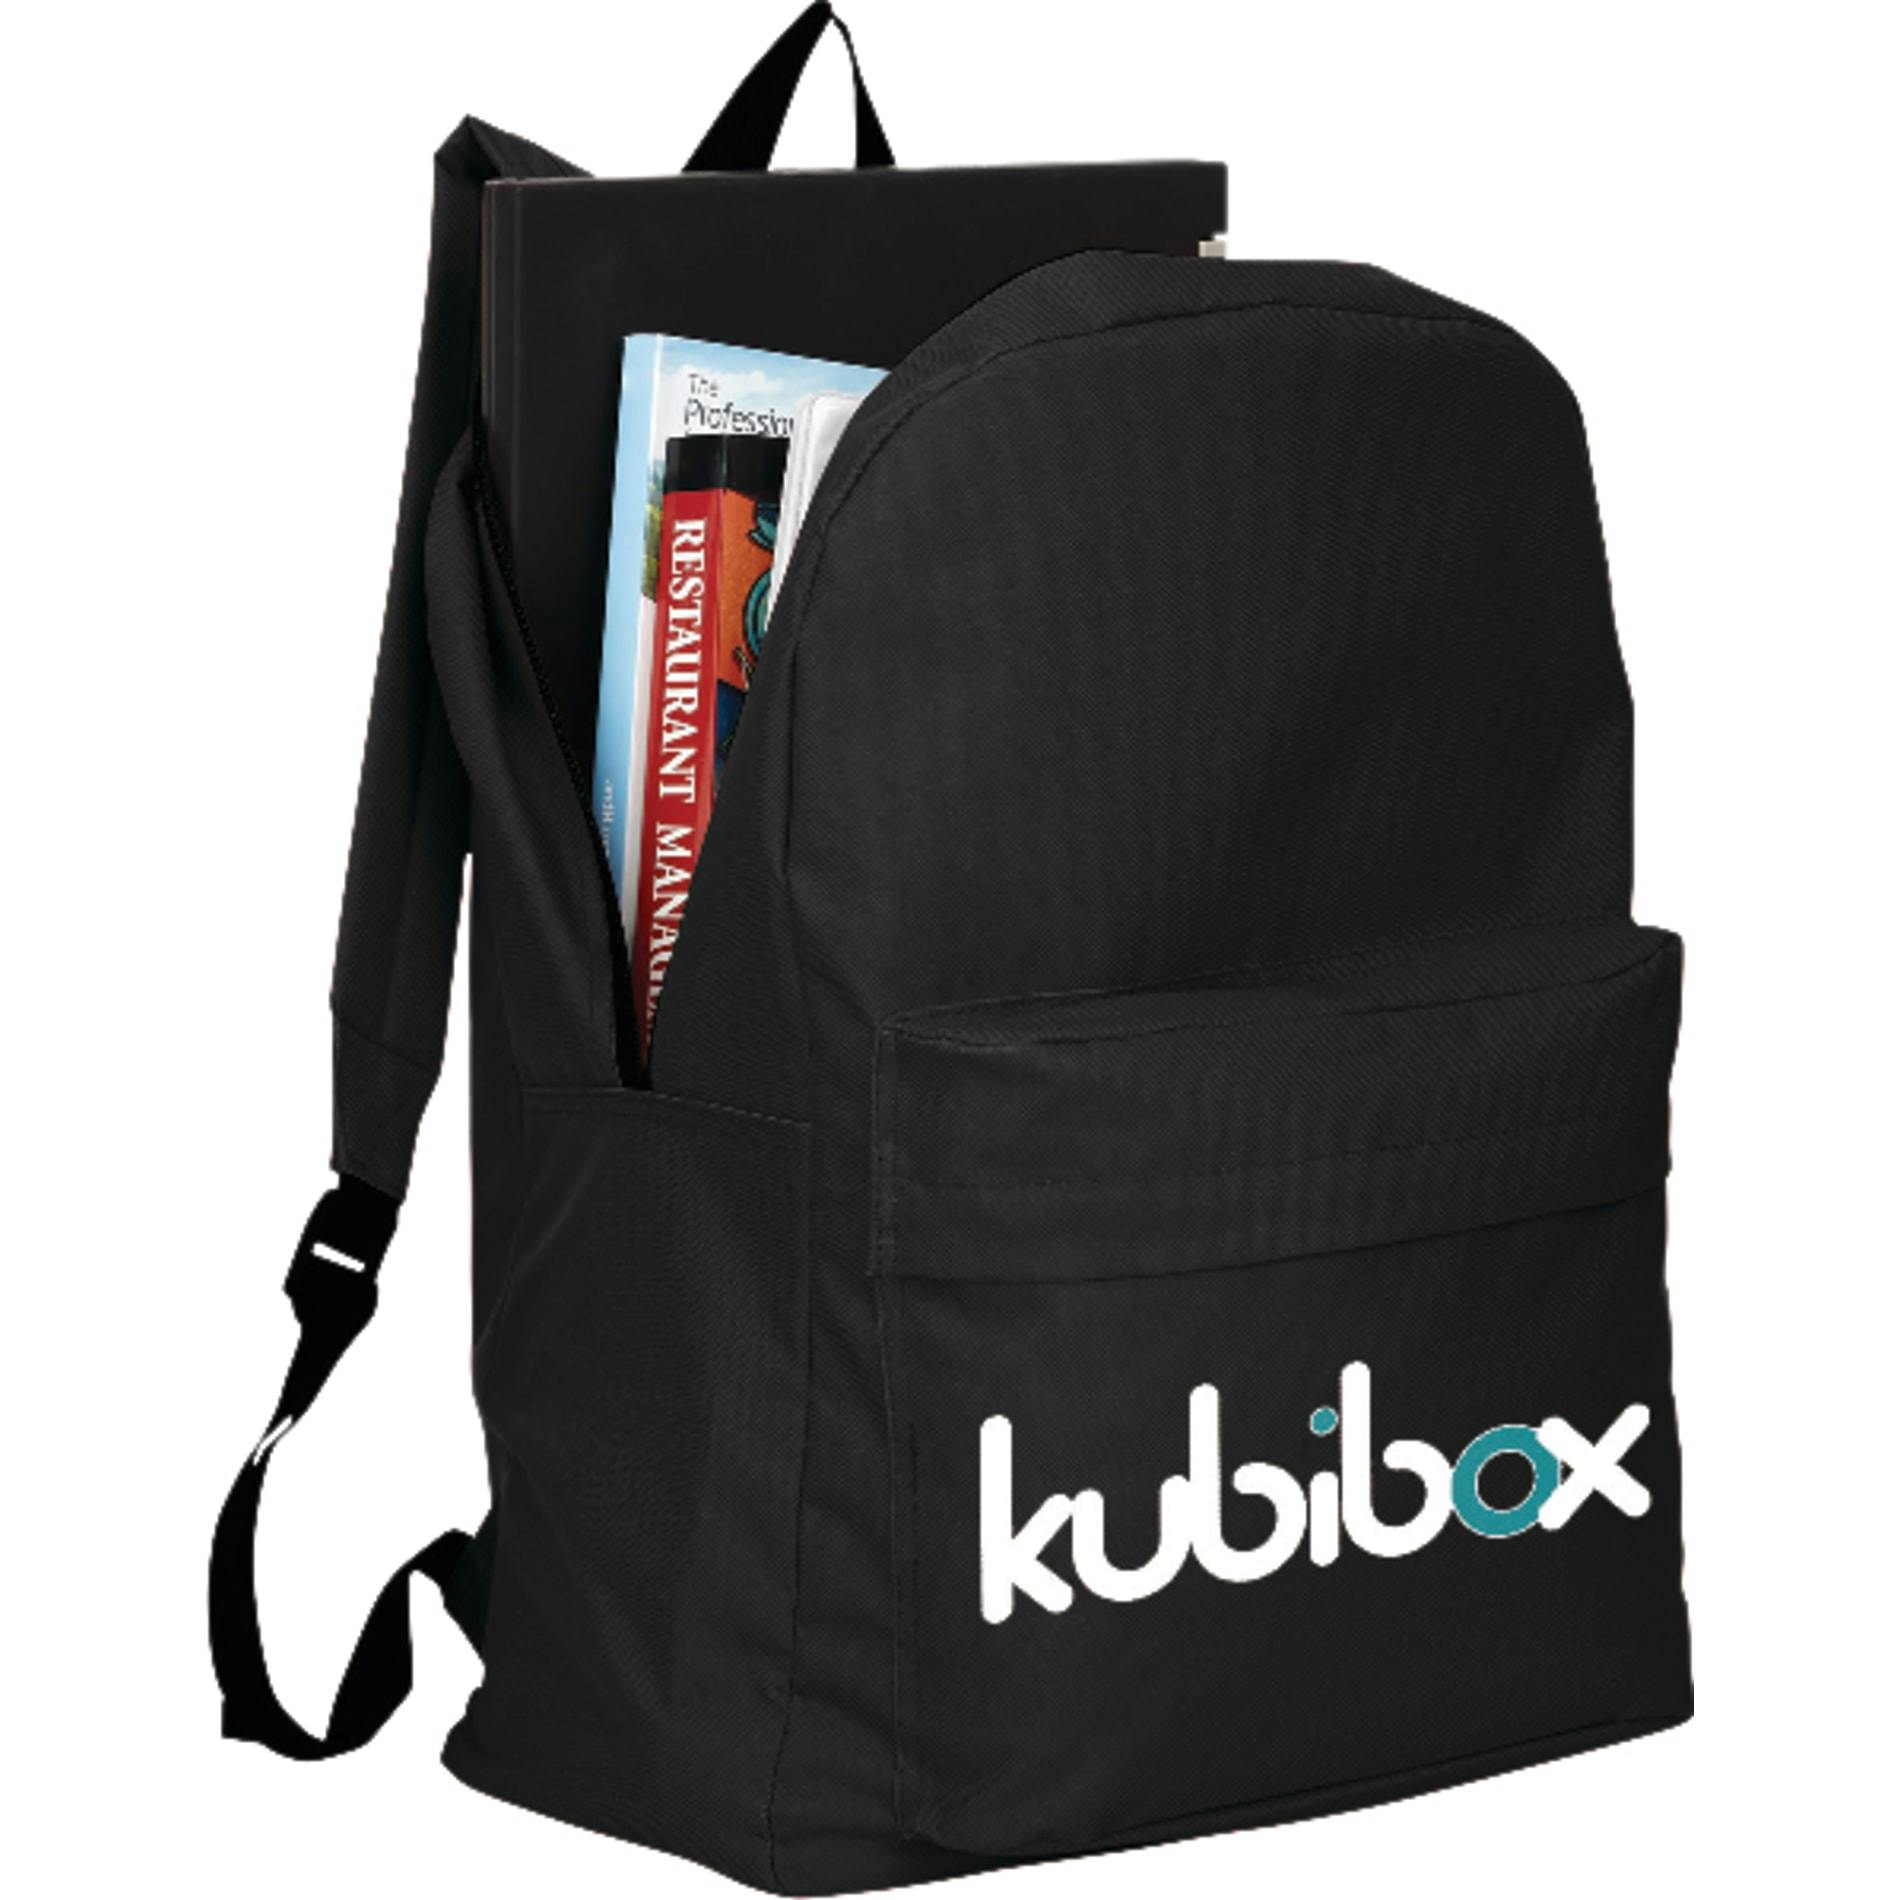 Buddy Budget 15" Computer Backpack - additional Image 4